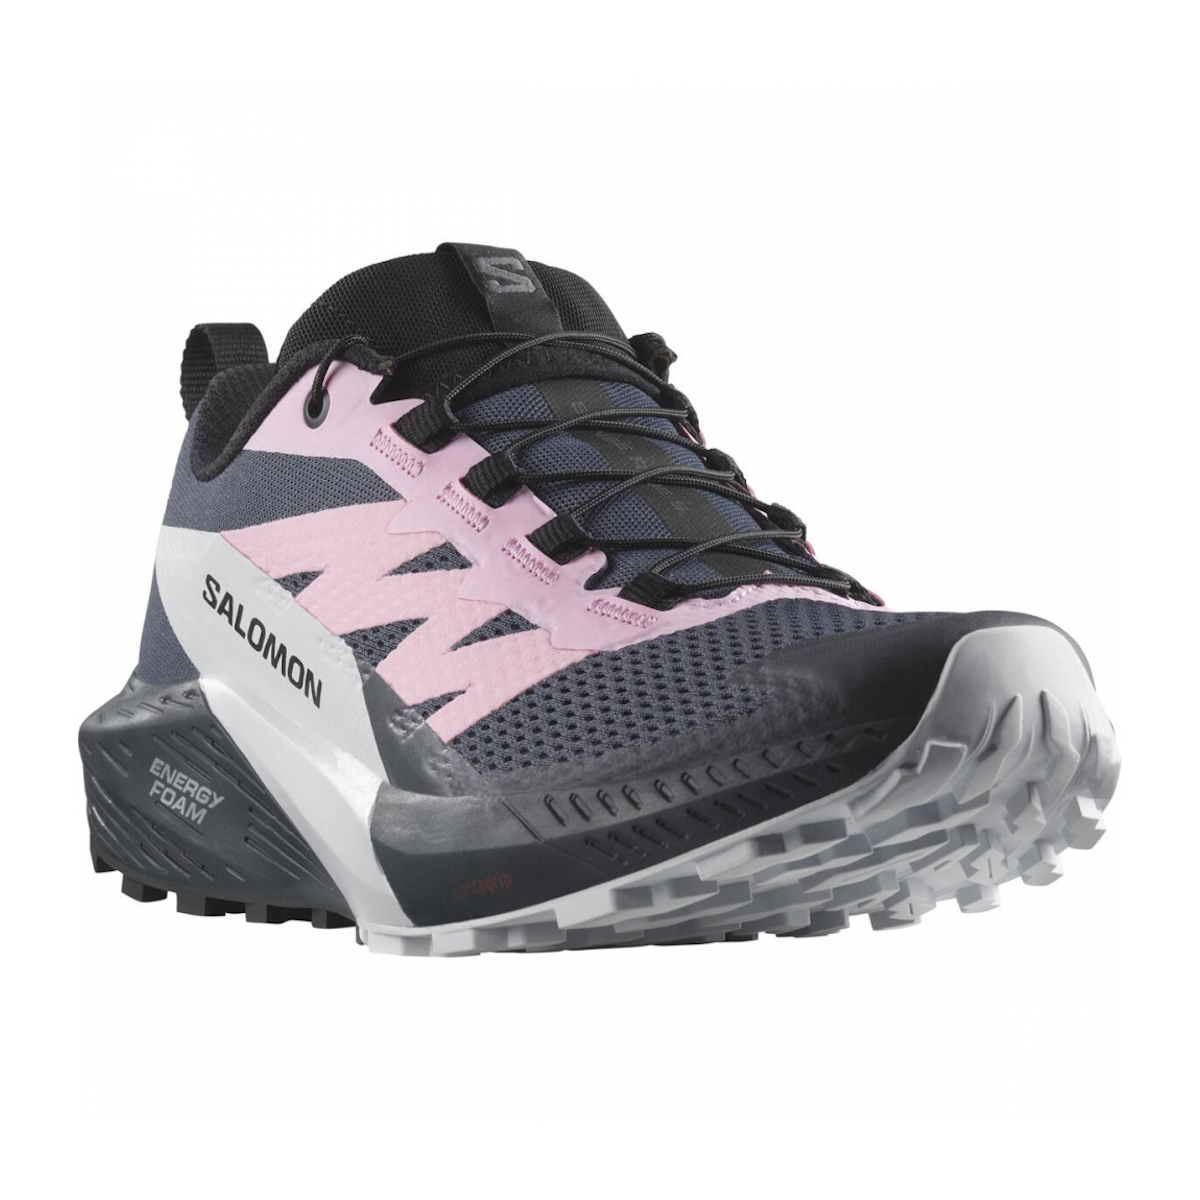 SALOMON SENSE RIDE 5 W trail running shoes - black/grey/pink